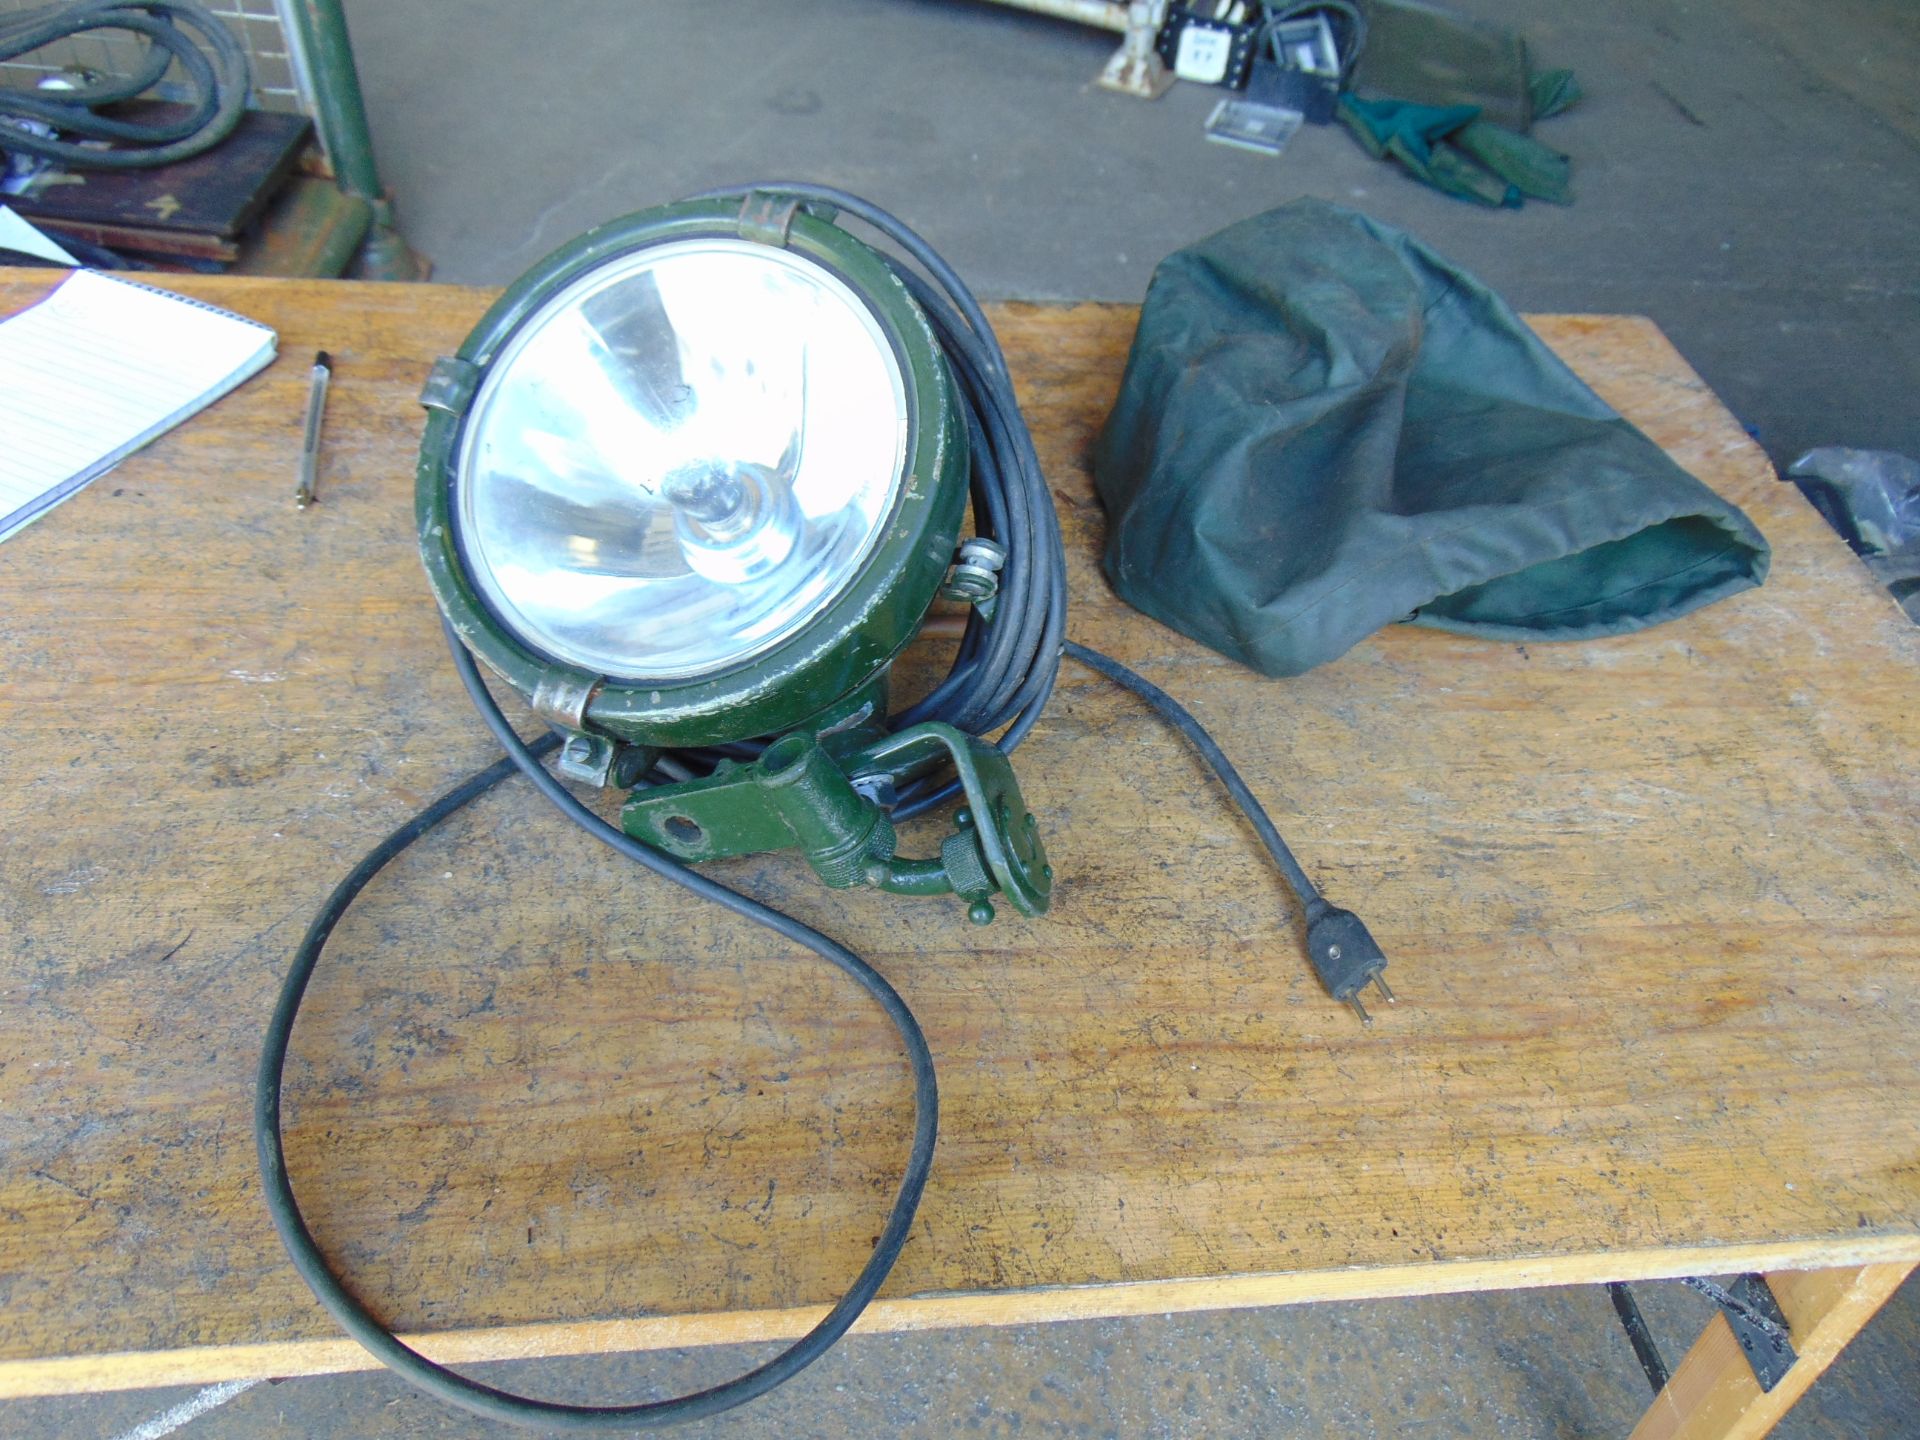 British Army FV159907 Vehicle Spot Lamp c/w Cable, Bracket & Plug c/w Bag